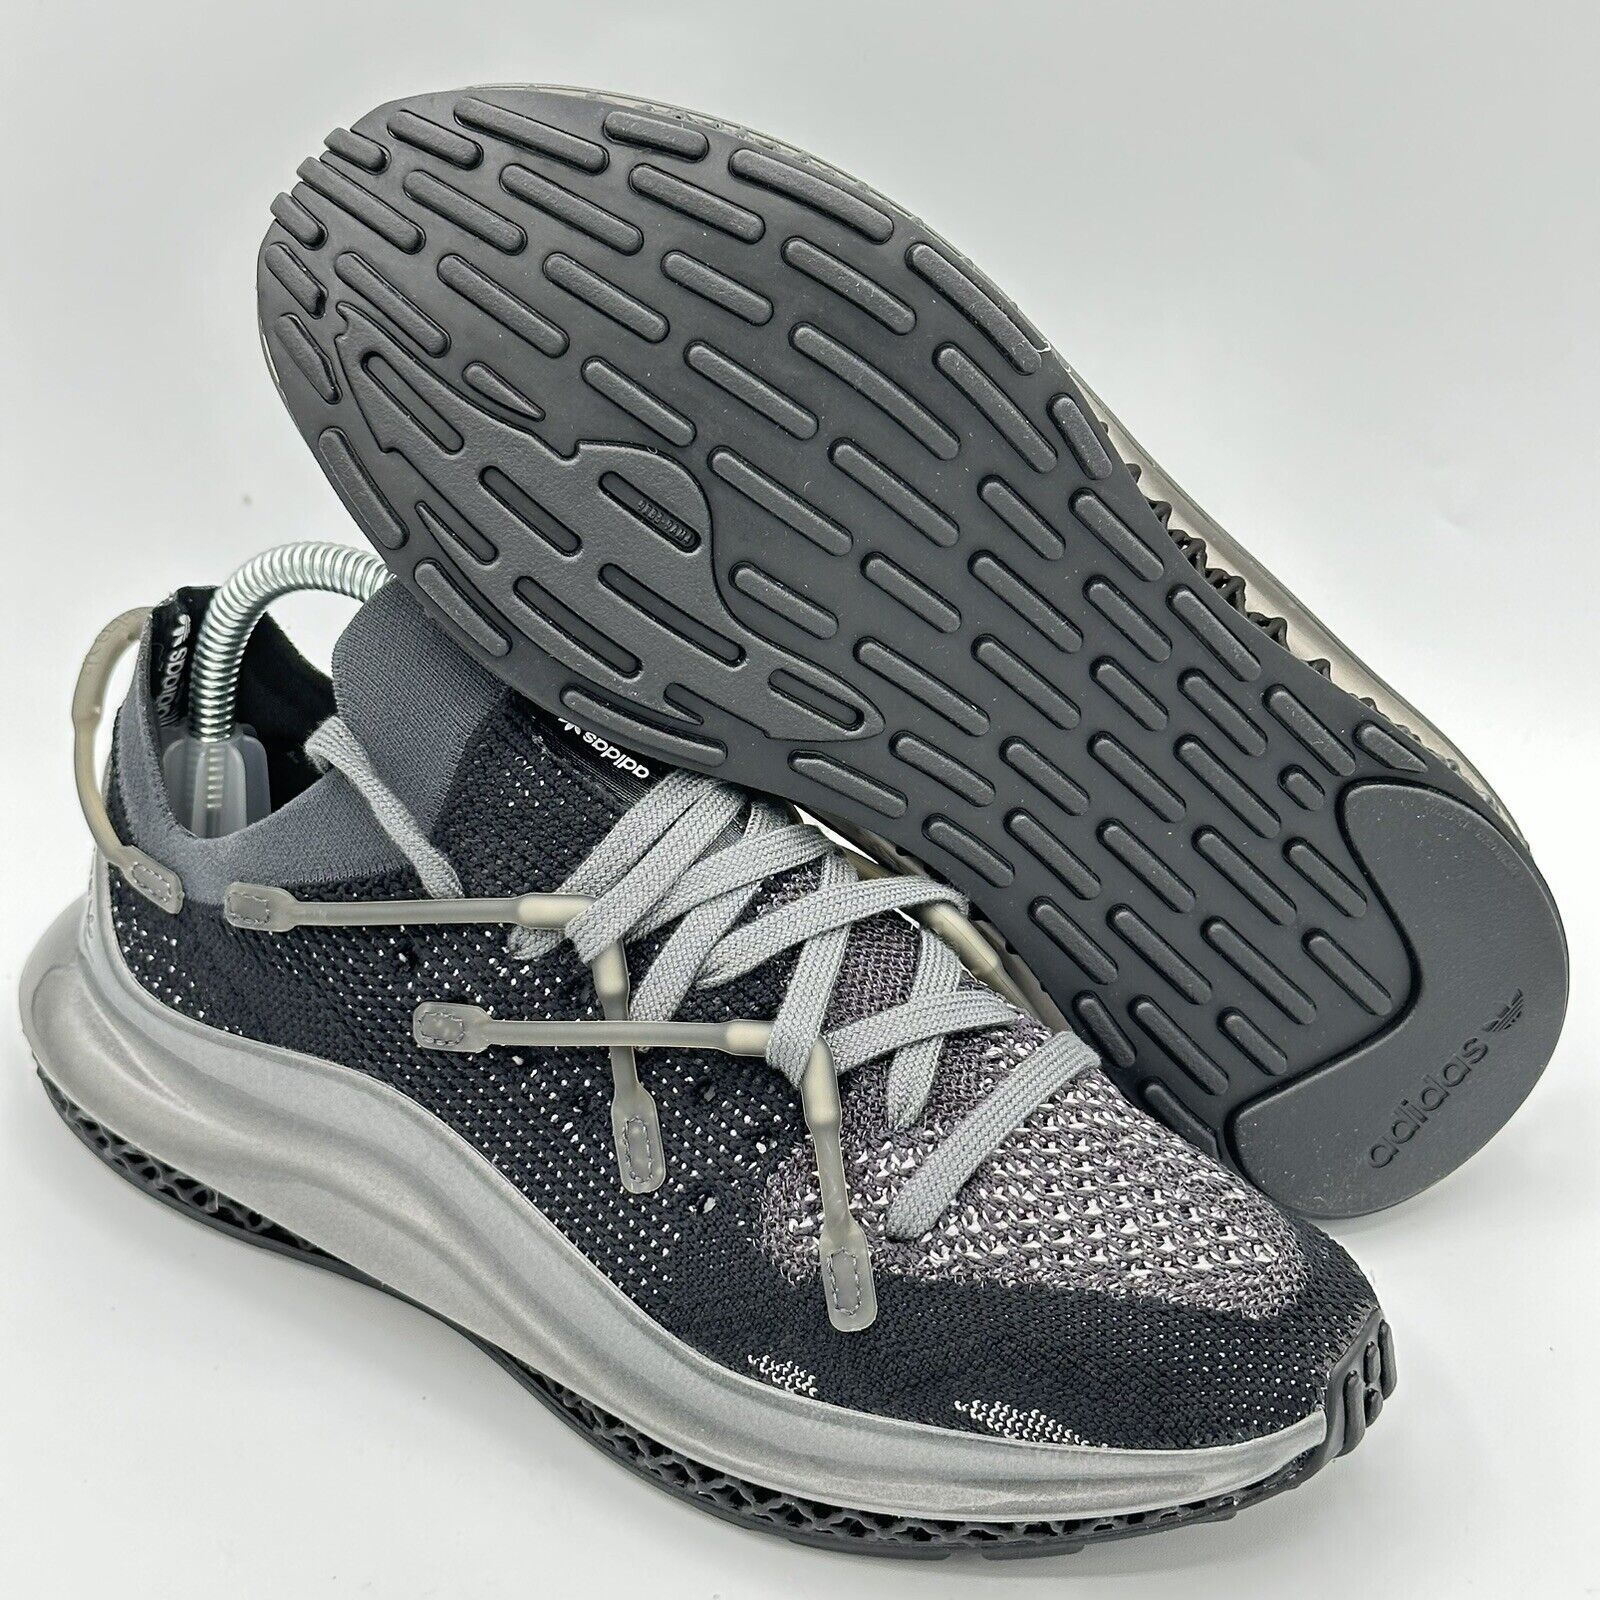 adidas 4D FUSIO Black Silver Metallic Carbon Shoes H04512 Men's Size 7